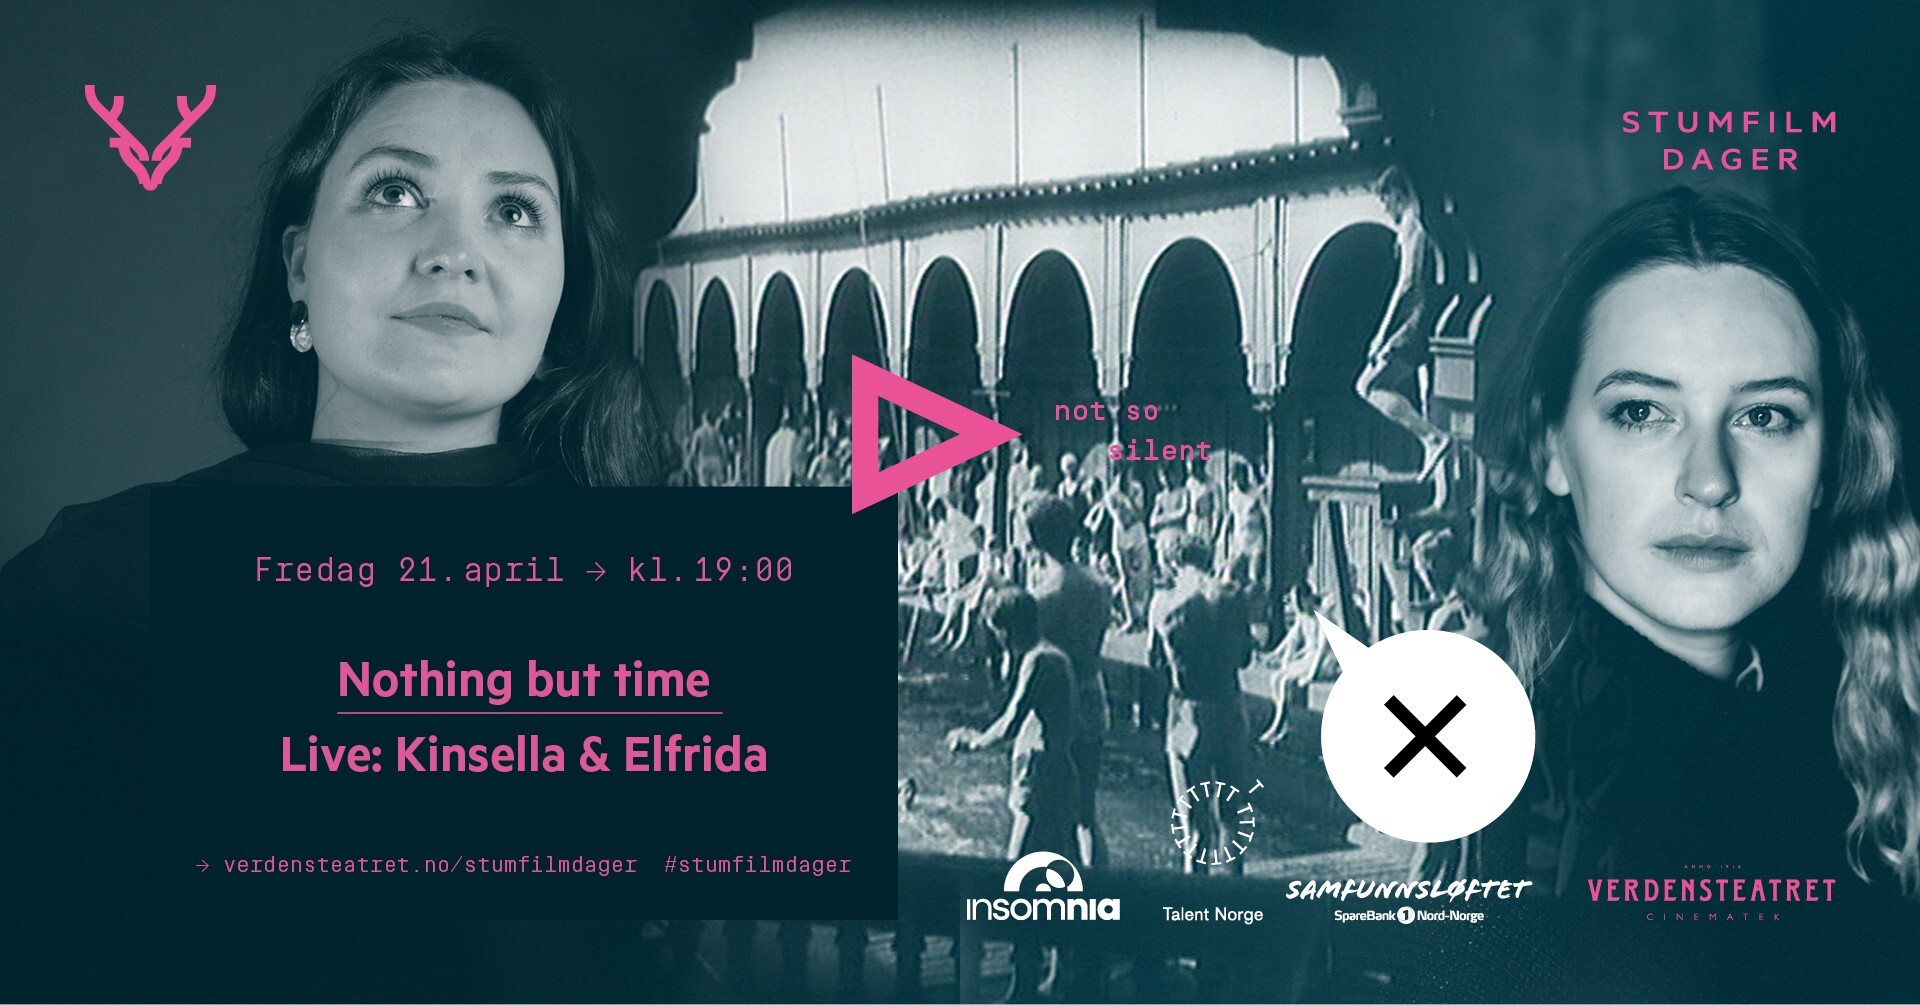 Stumfilmdager: NOTHING BUT TIME / Live Kinsella & Elfrida